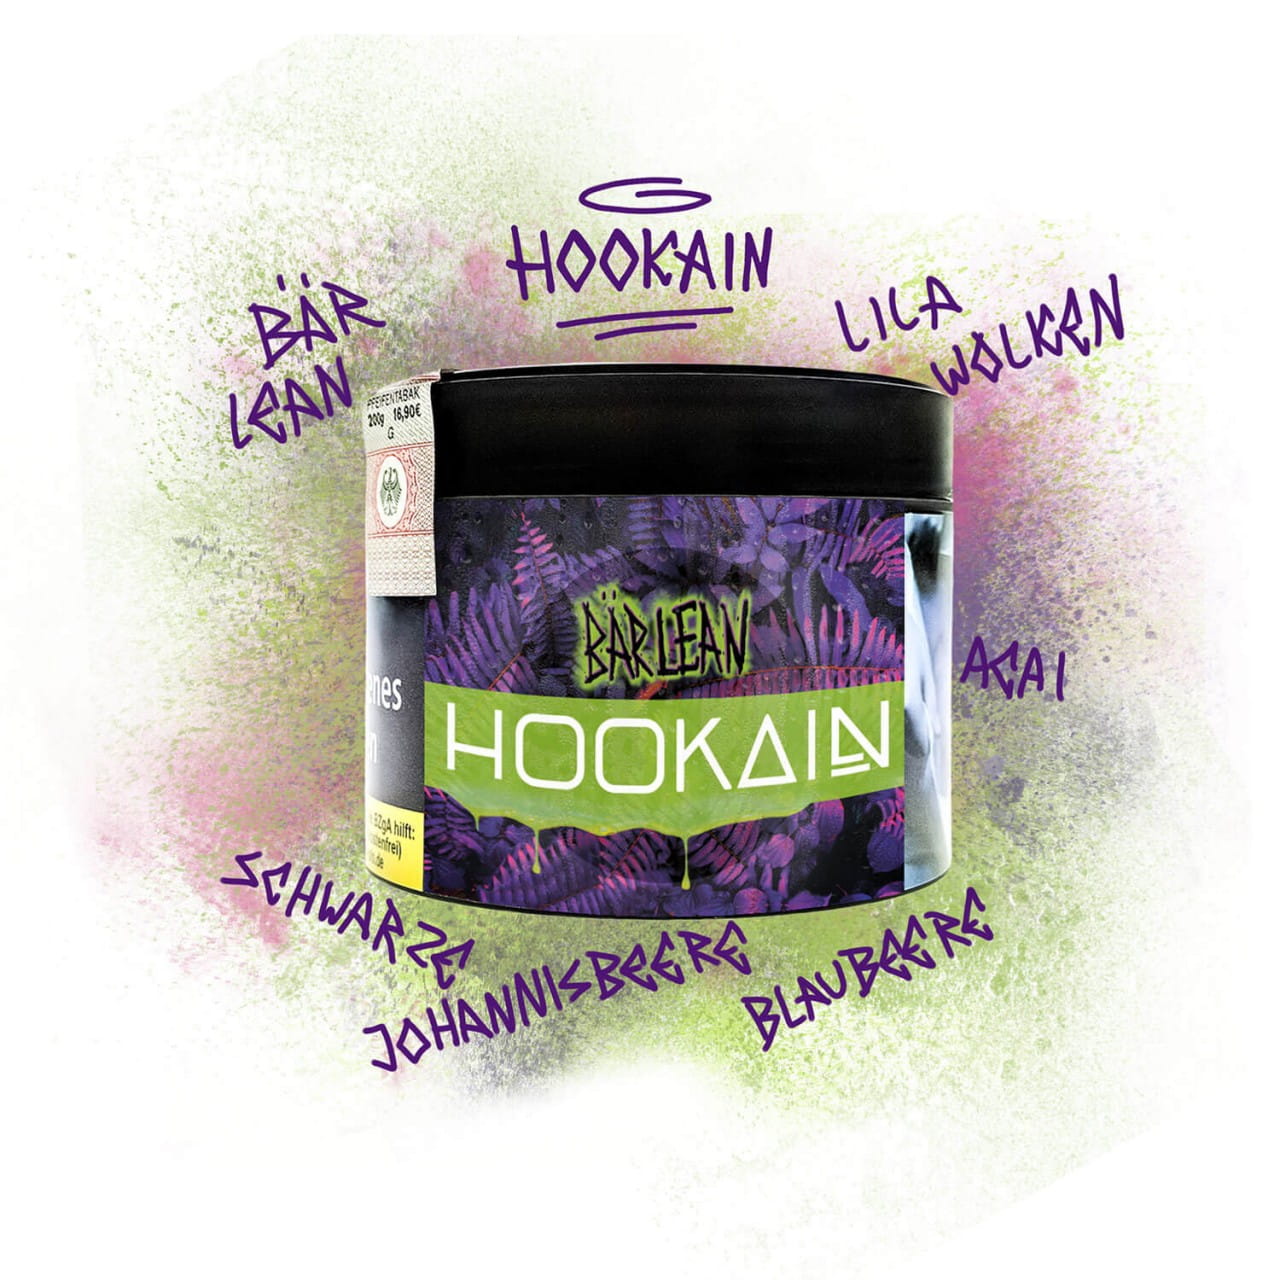 Hookain Tabak - Bär Lean 200 g unter ohne Angabe